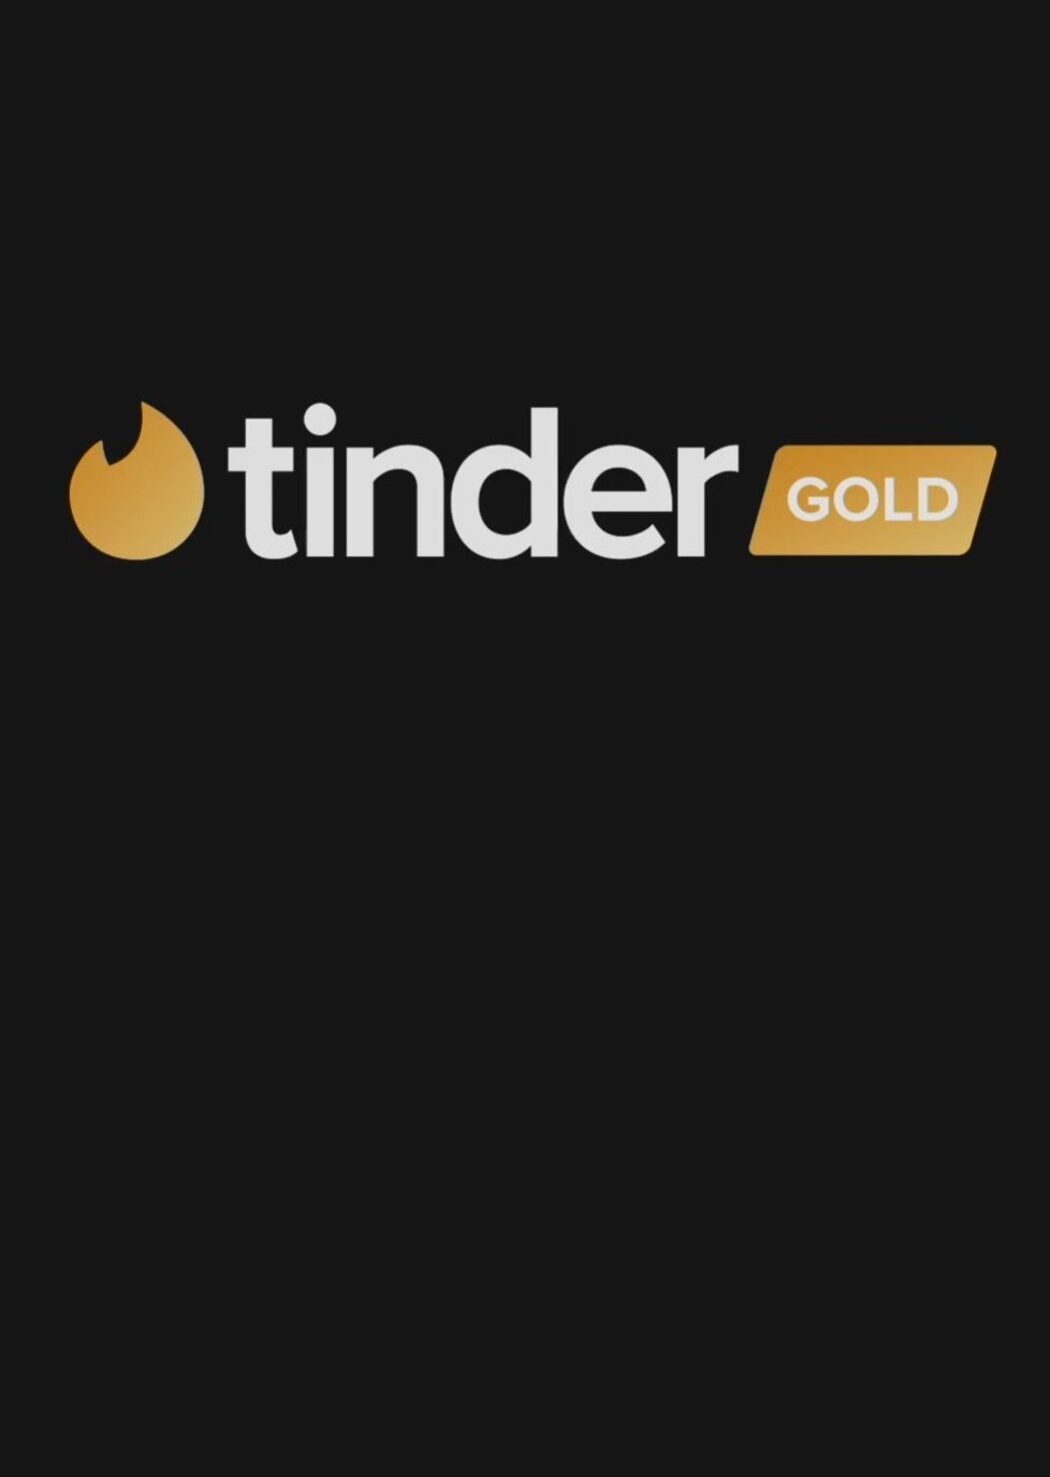 Como cancelar Tinder Gold